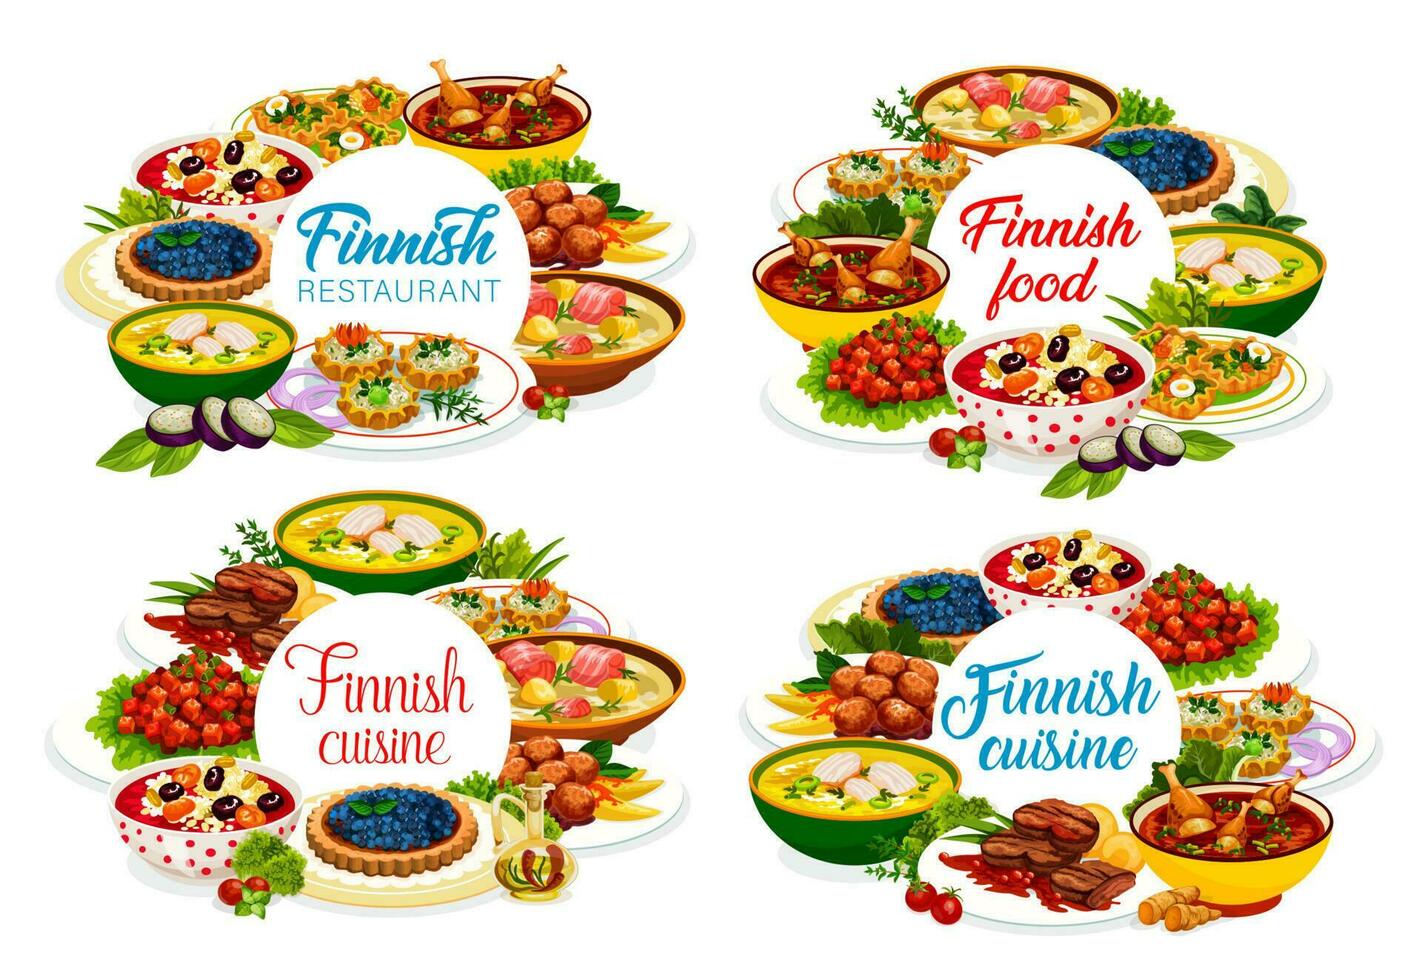 Finnish restaurant cuisine menu cover design meals vector